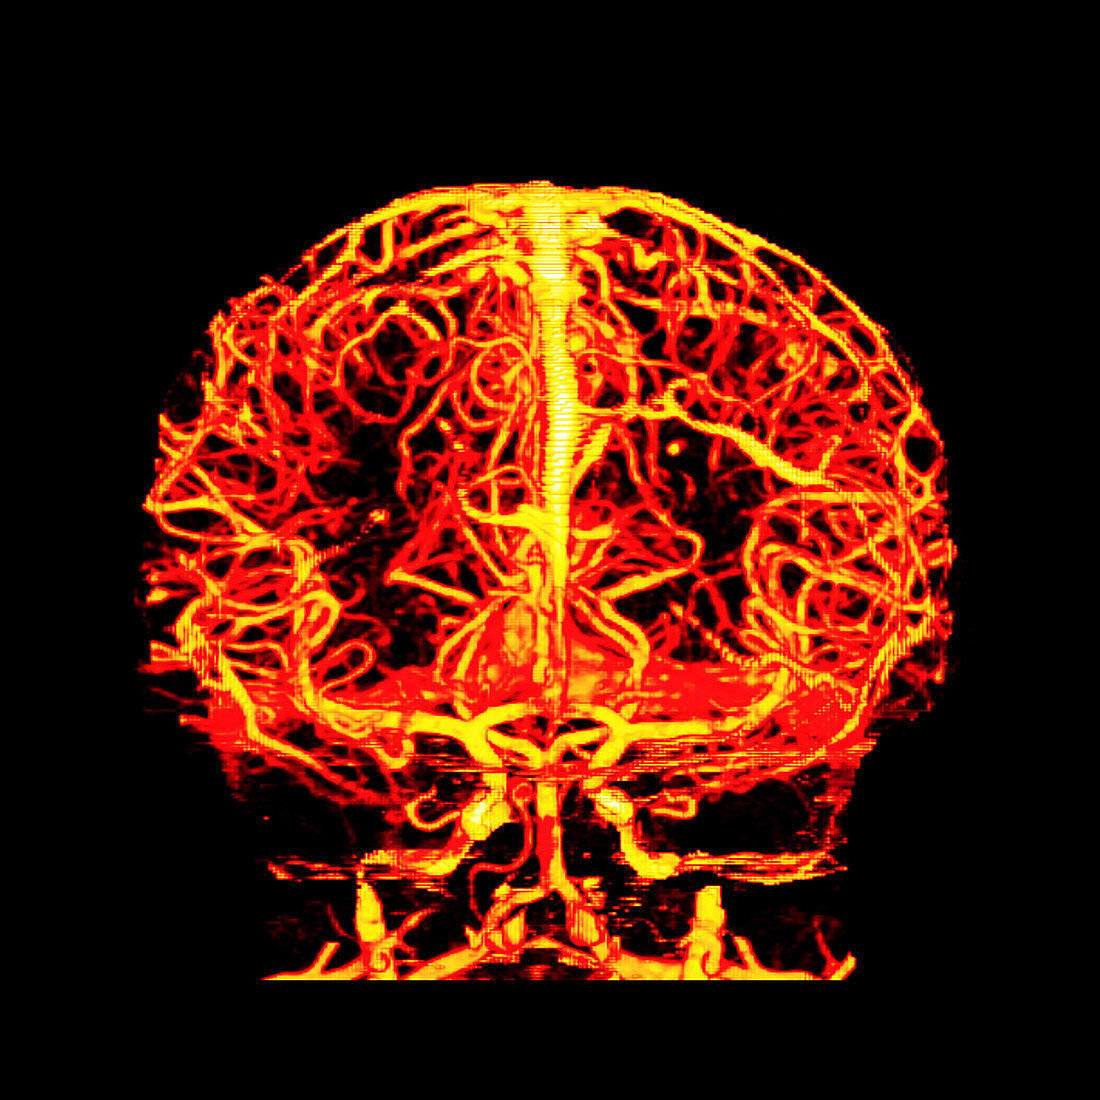 Normal Cerebral Vasculature, 3D CT Angiogram